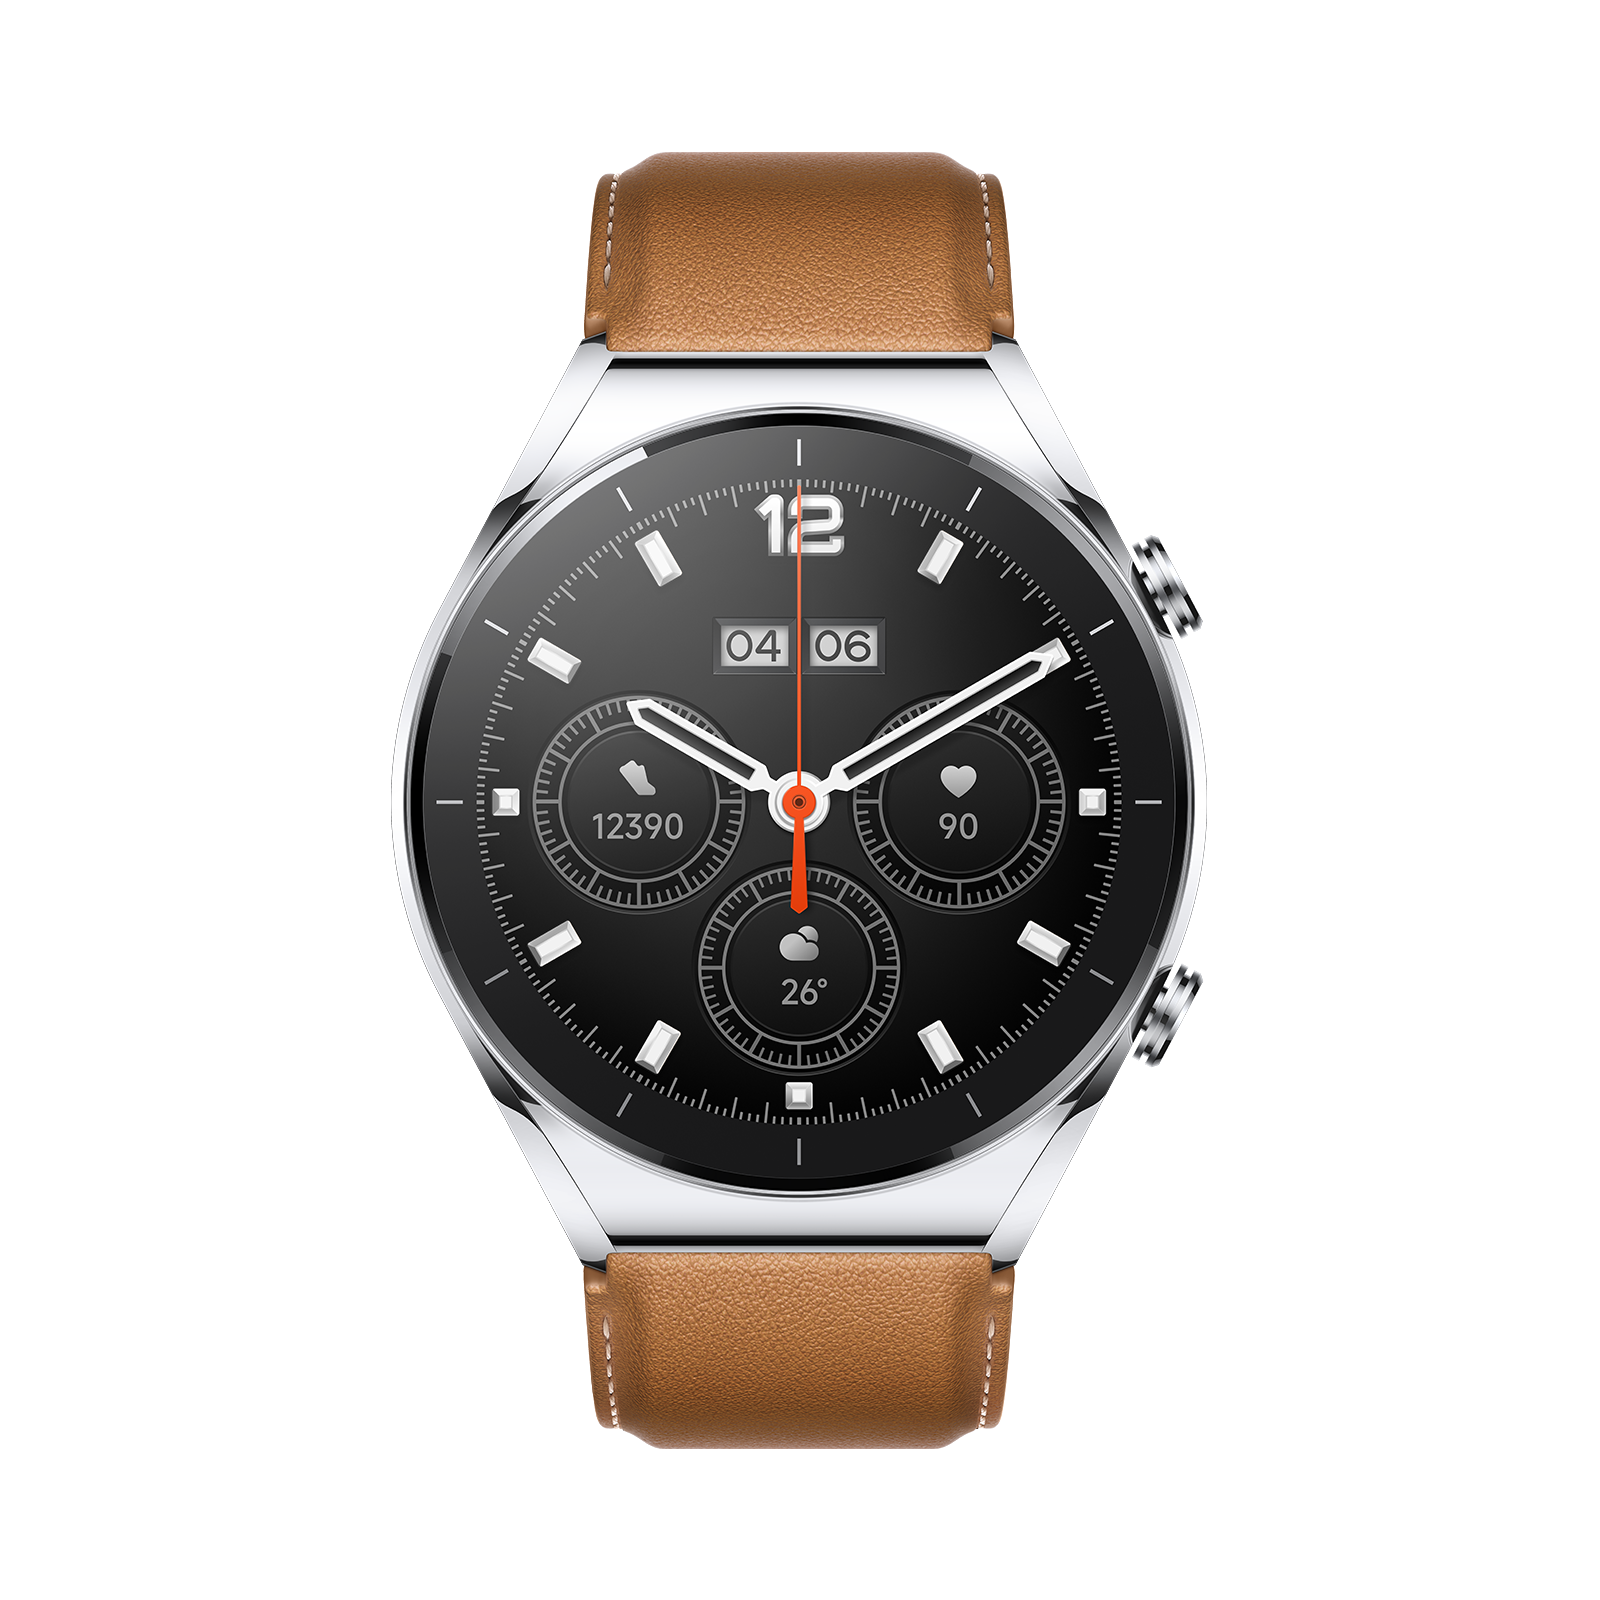 Image of Xiaomi Watch S1 Silver | Stay classy, stay fit | 117 modalità fitness | Sito ufficiale Xiaomi